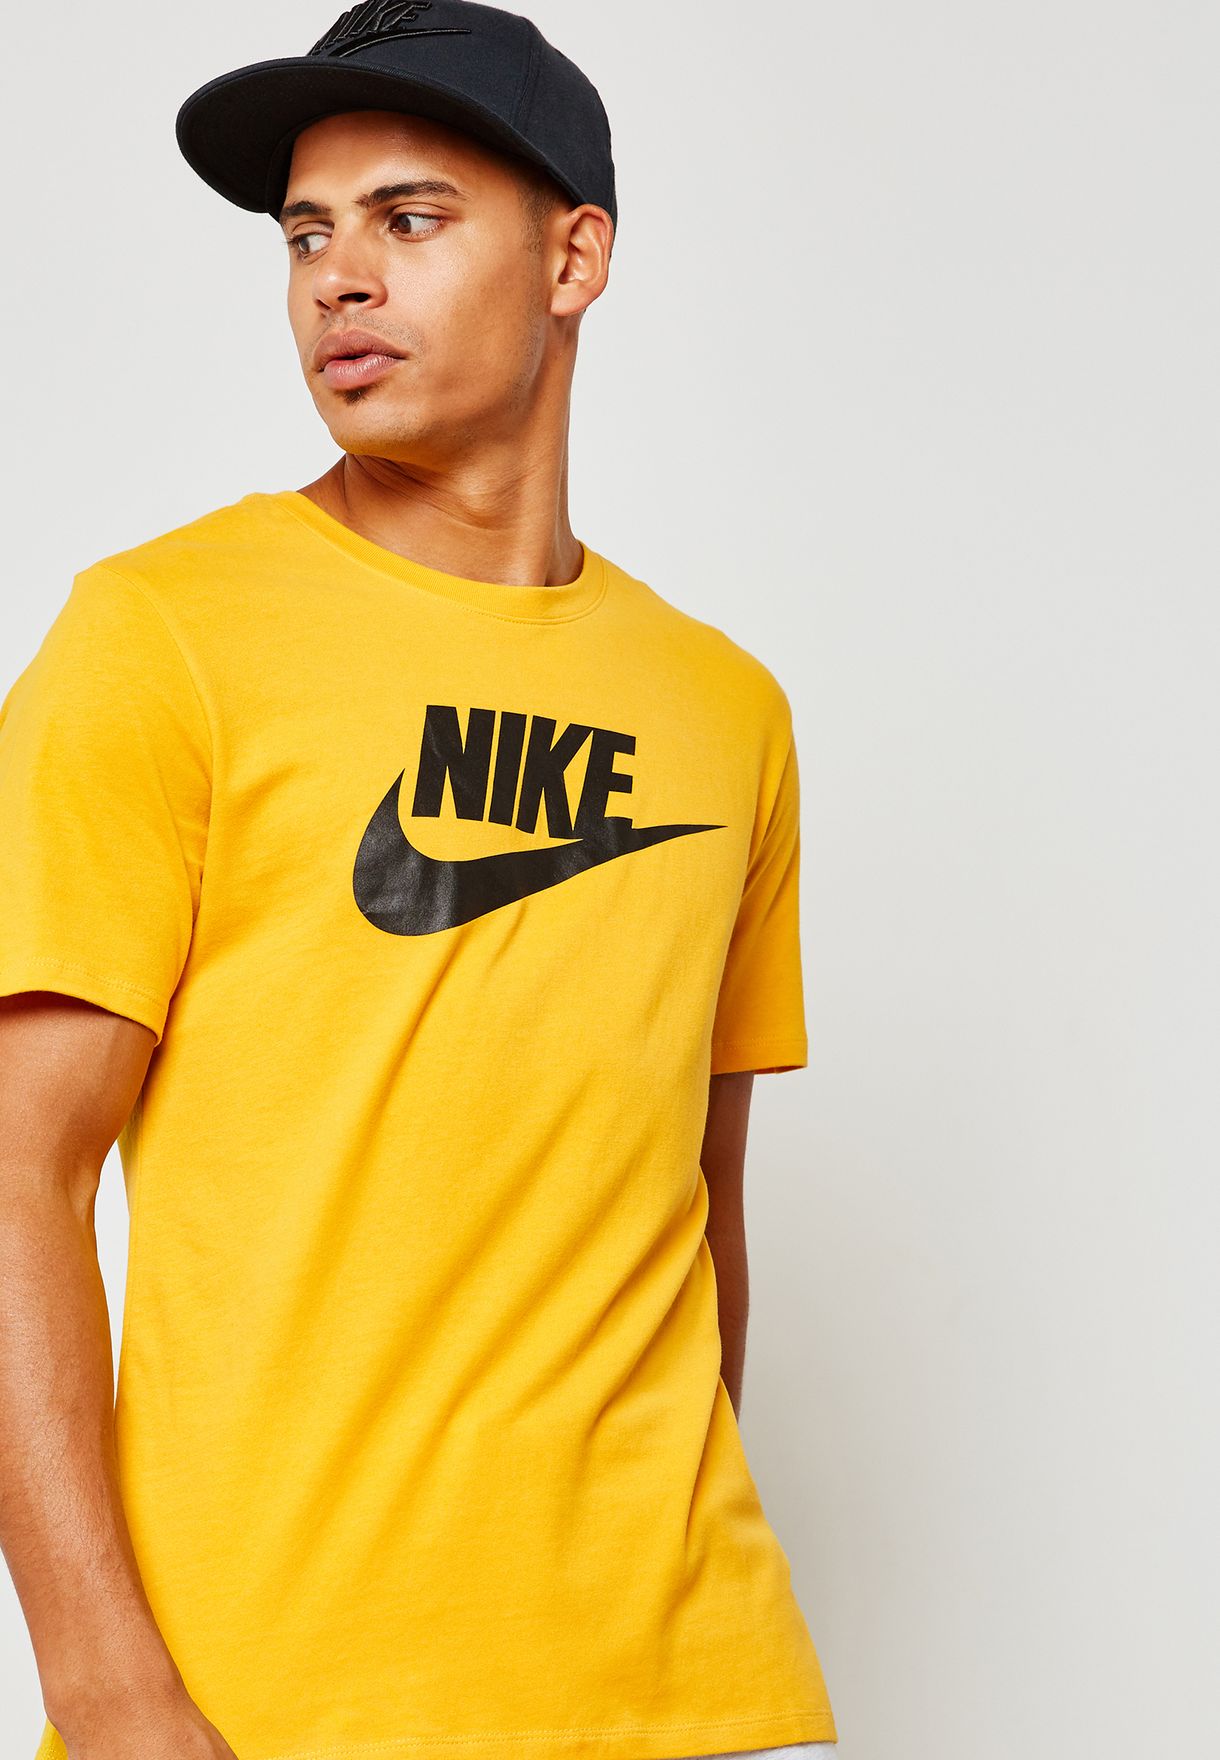 dynamic yellow nike shirt